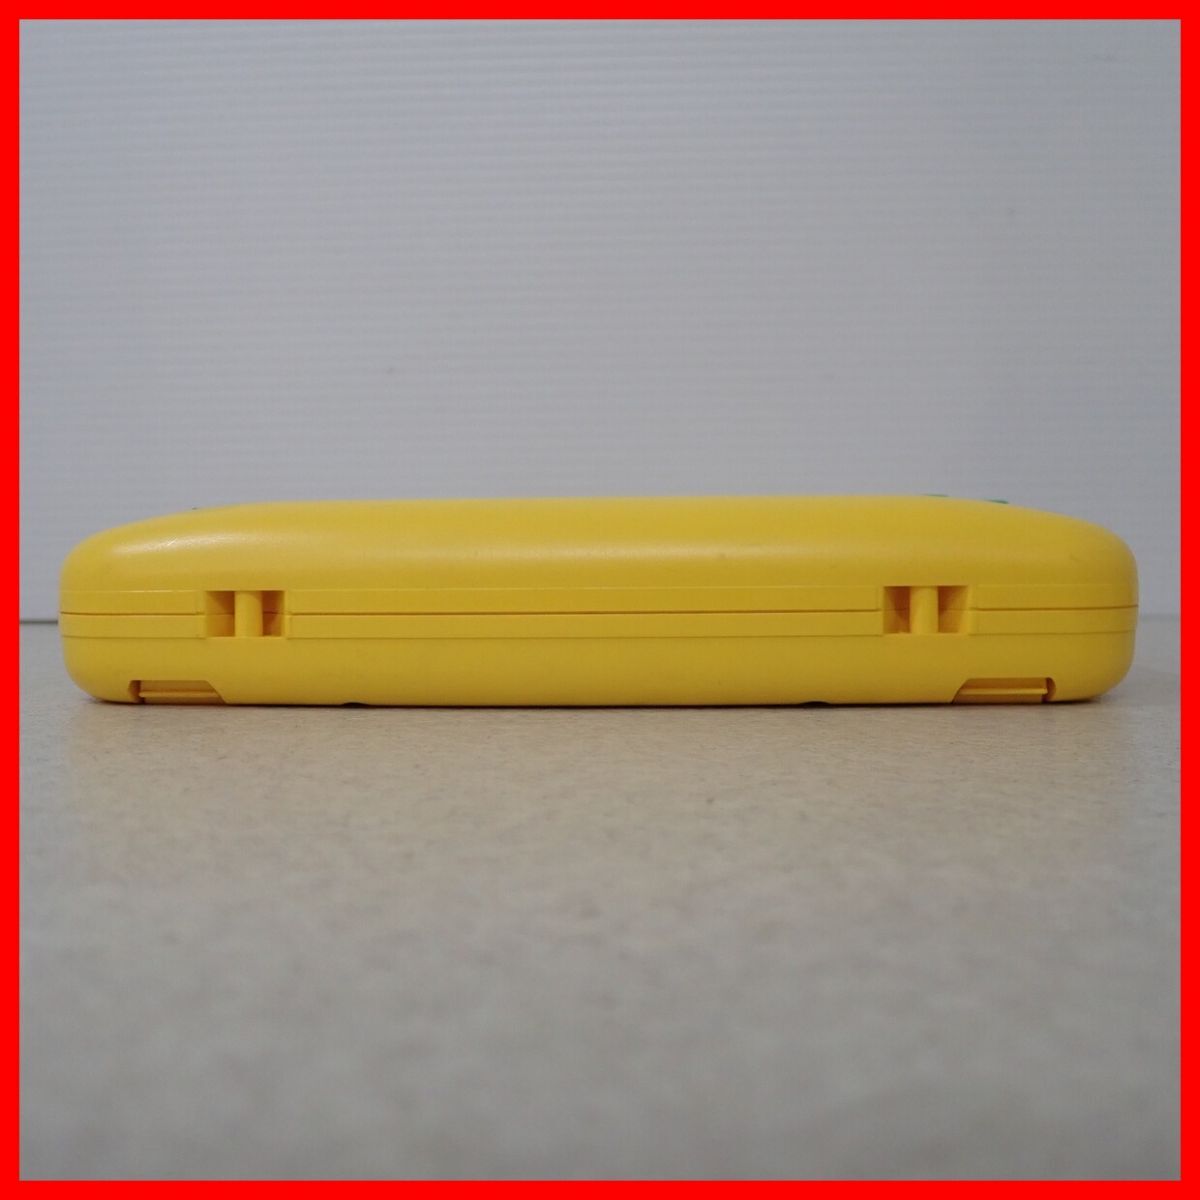 1 jpy ~ operation goods GG Game Gear body HGG-3210 YELLOW yellow Sega SEGA[10